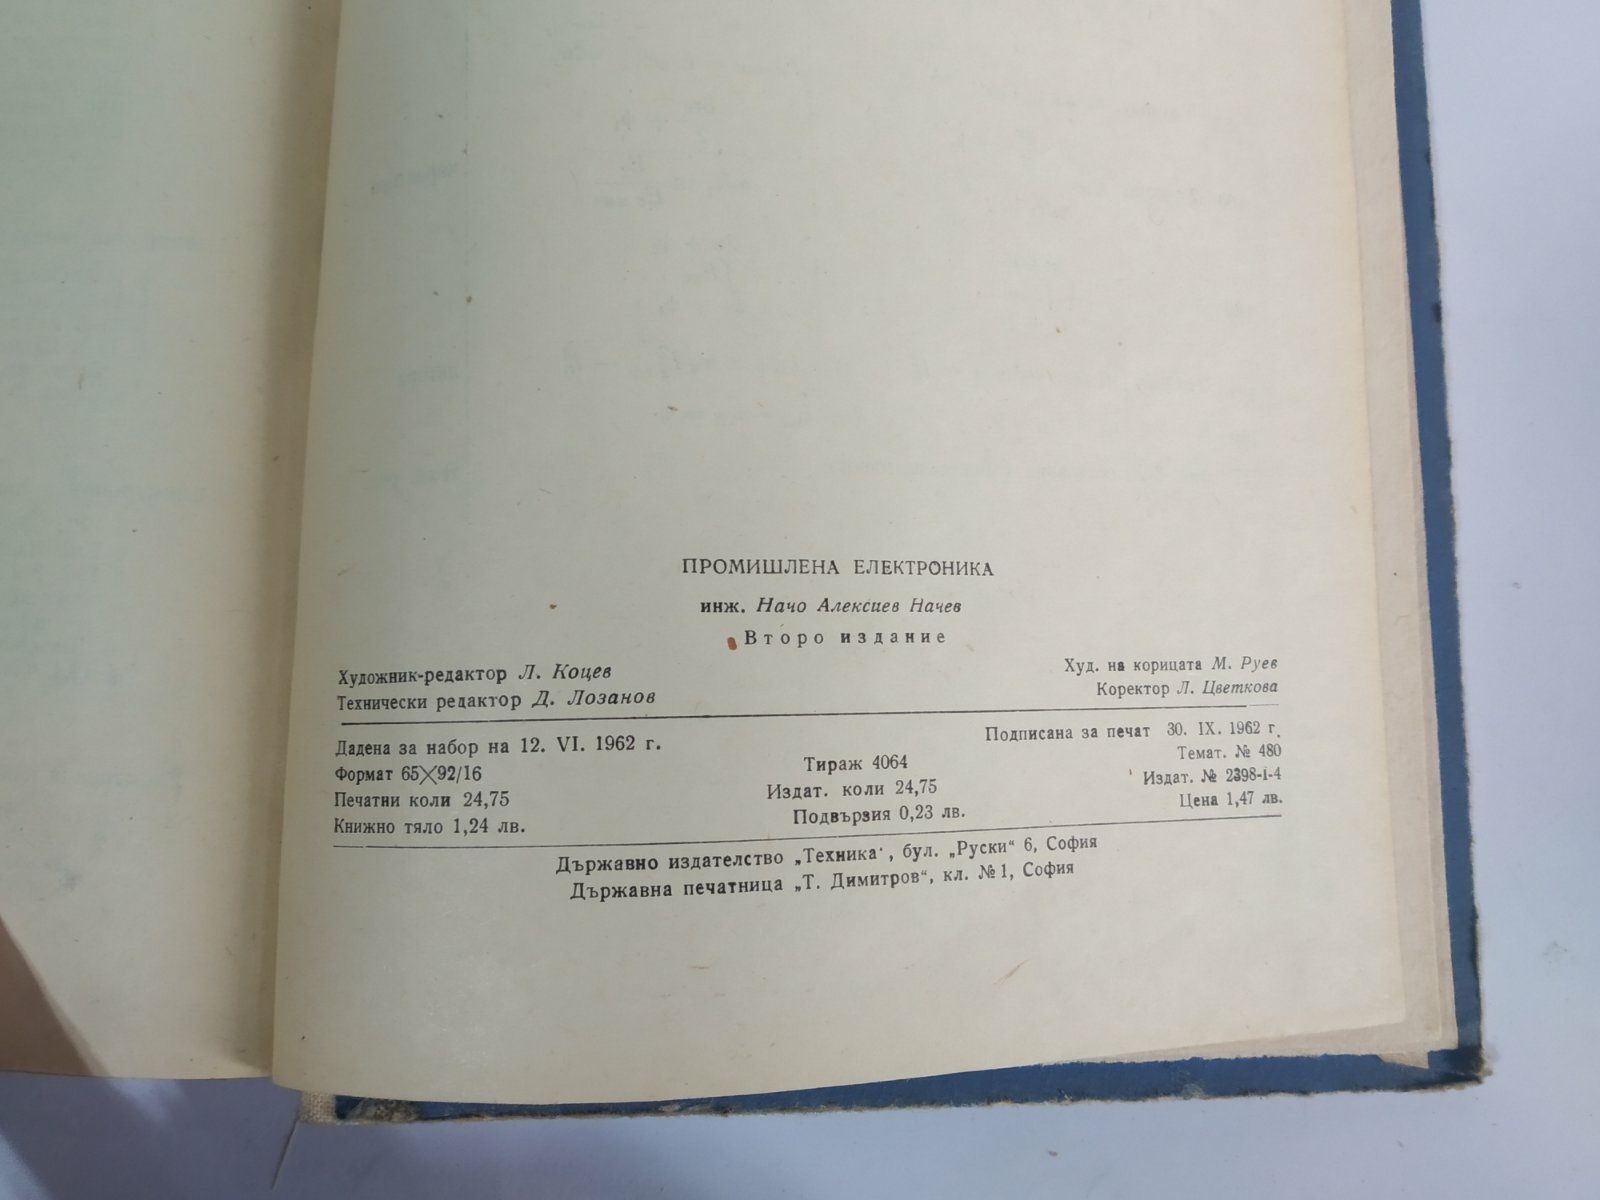 Стара техническа литература "Промишлена електроника"